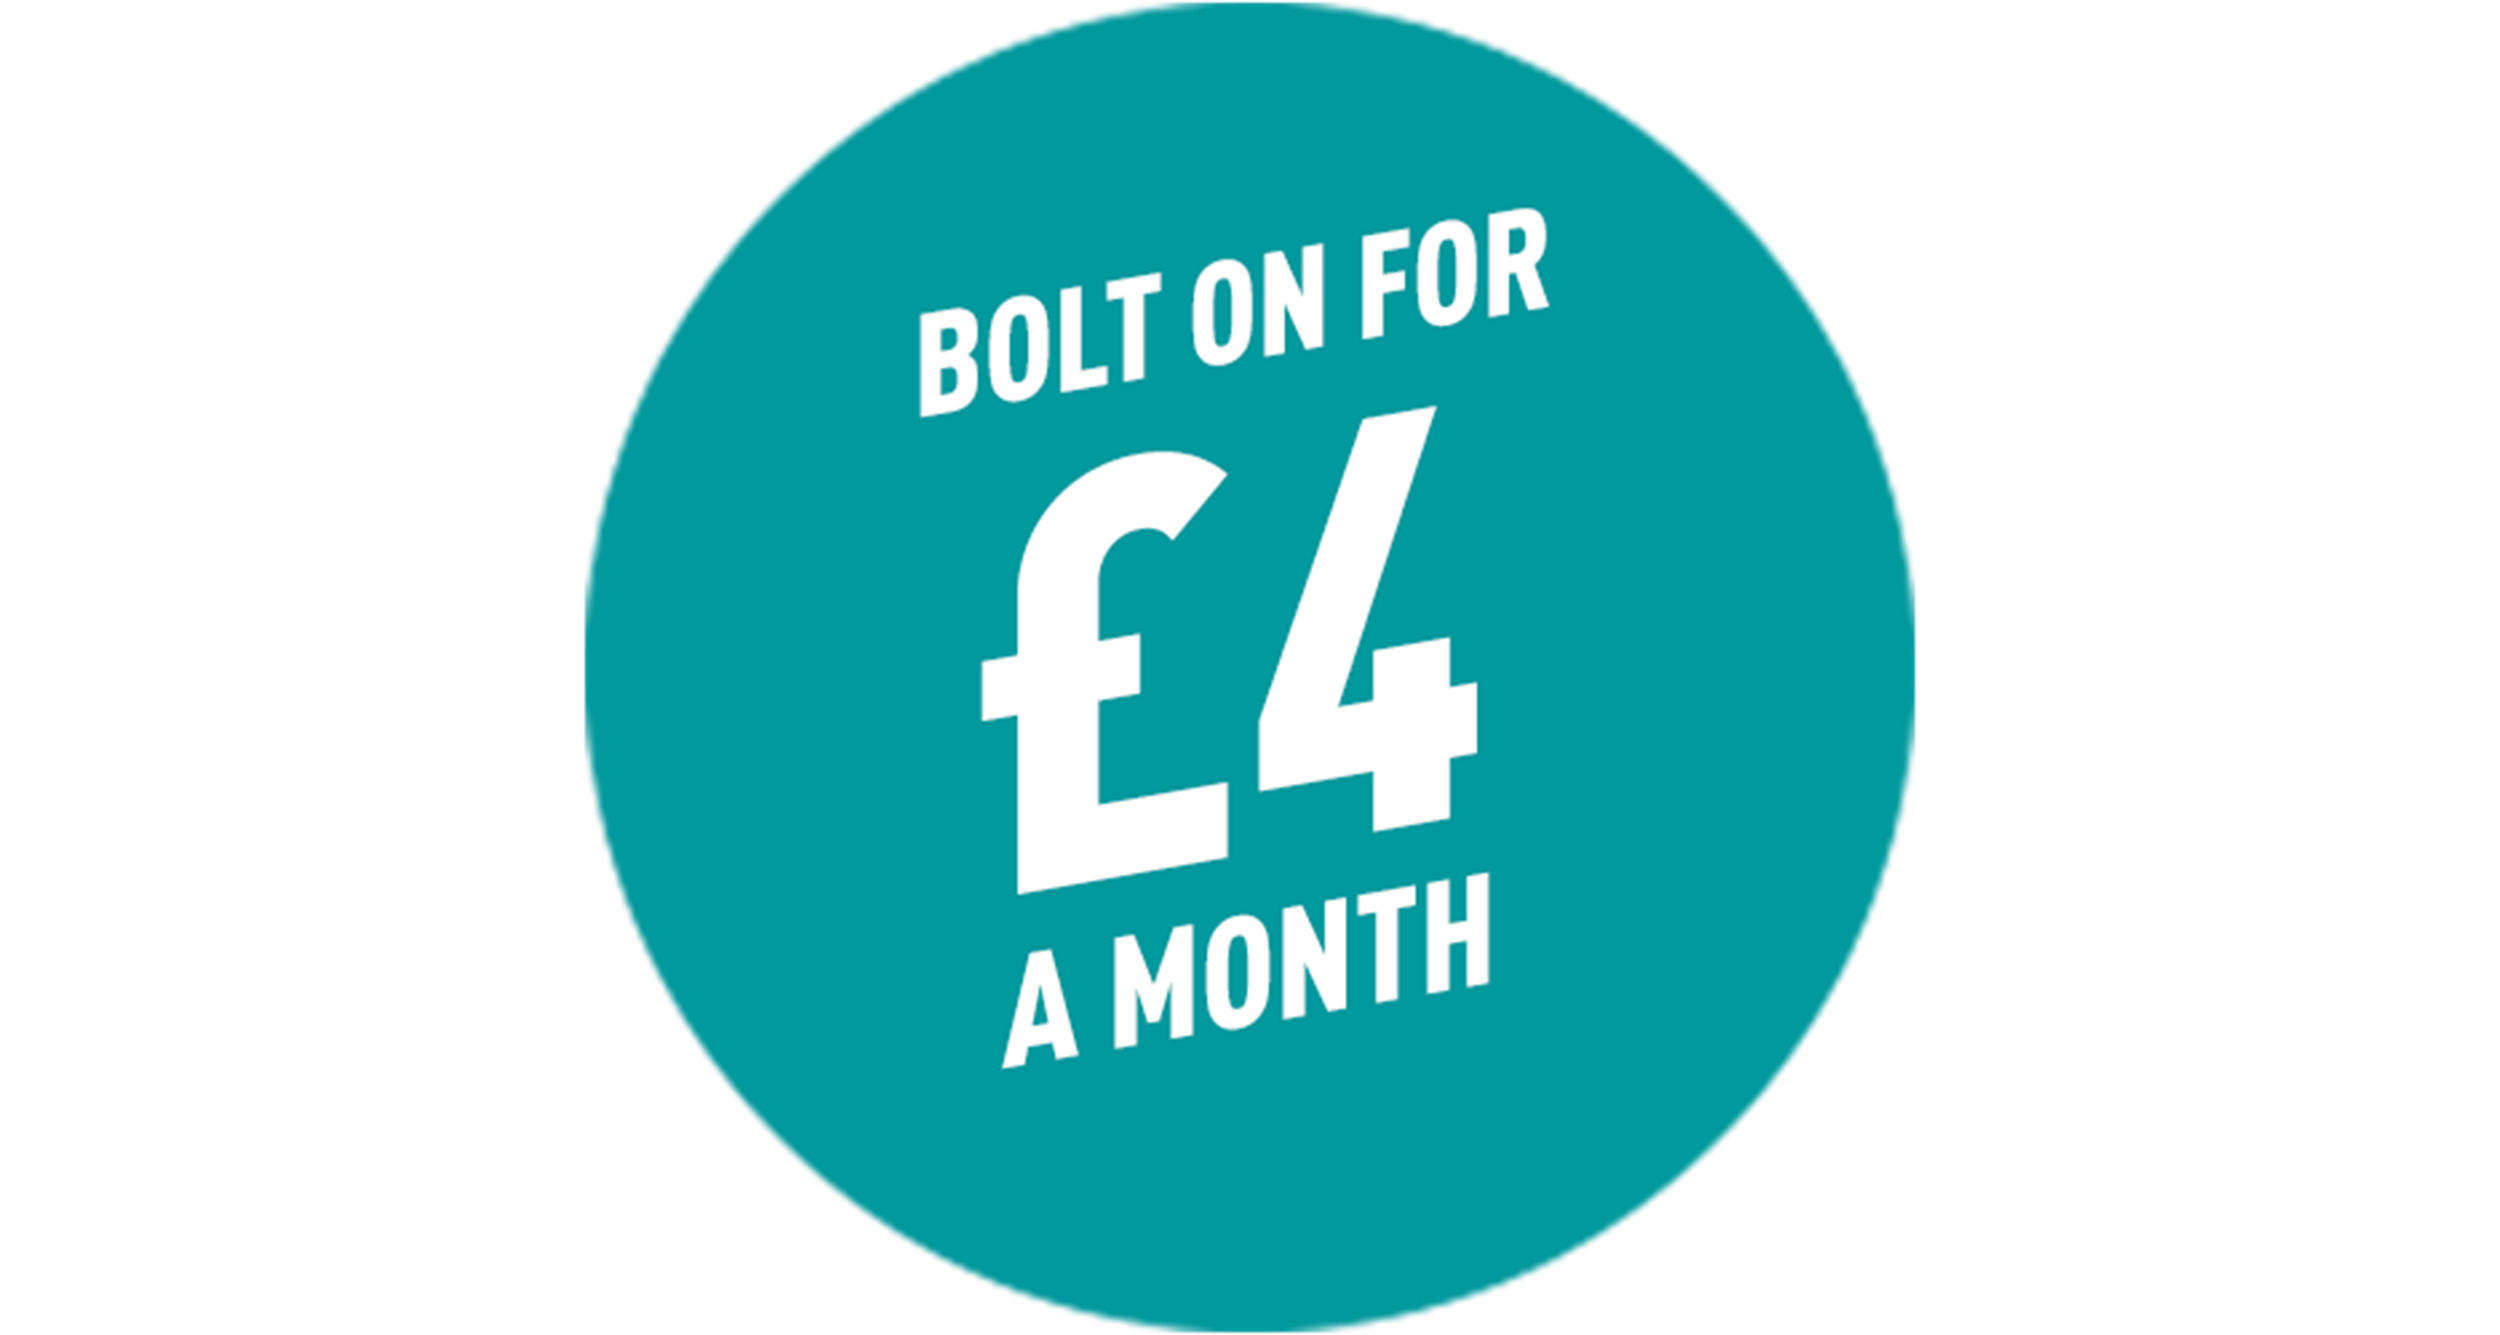 Bolt on £4 a month